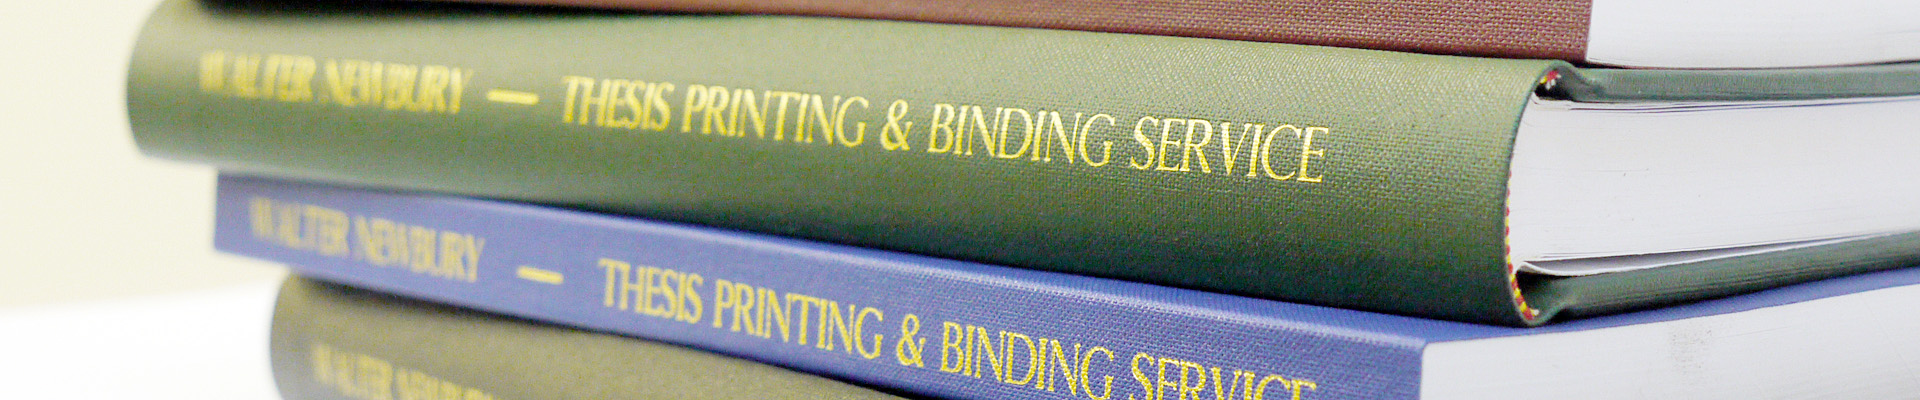 thesis binding service london